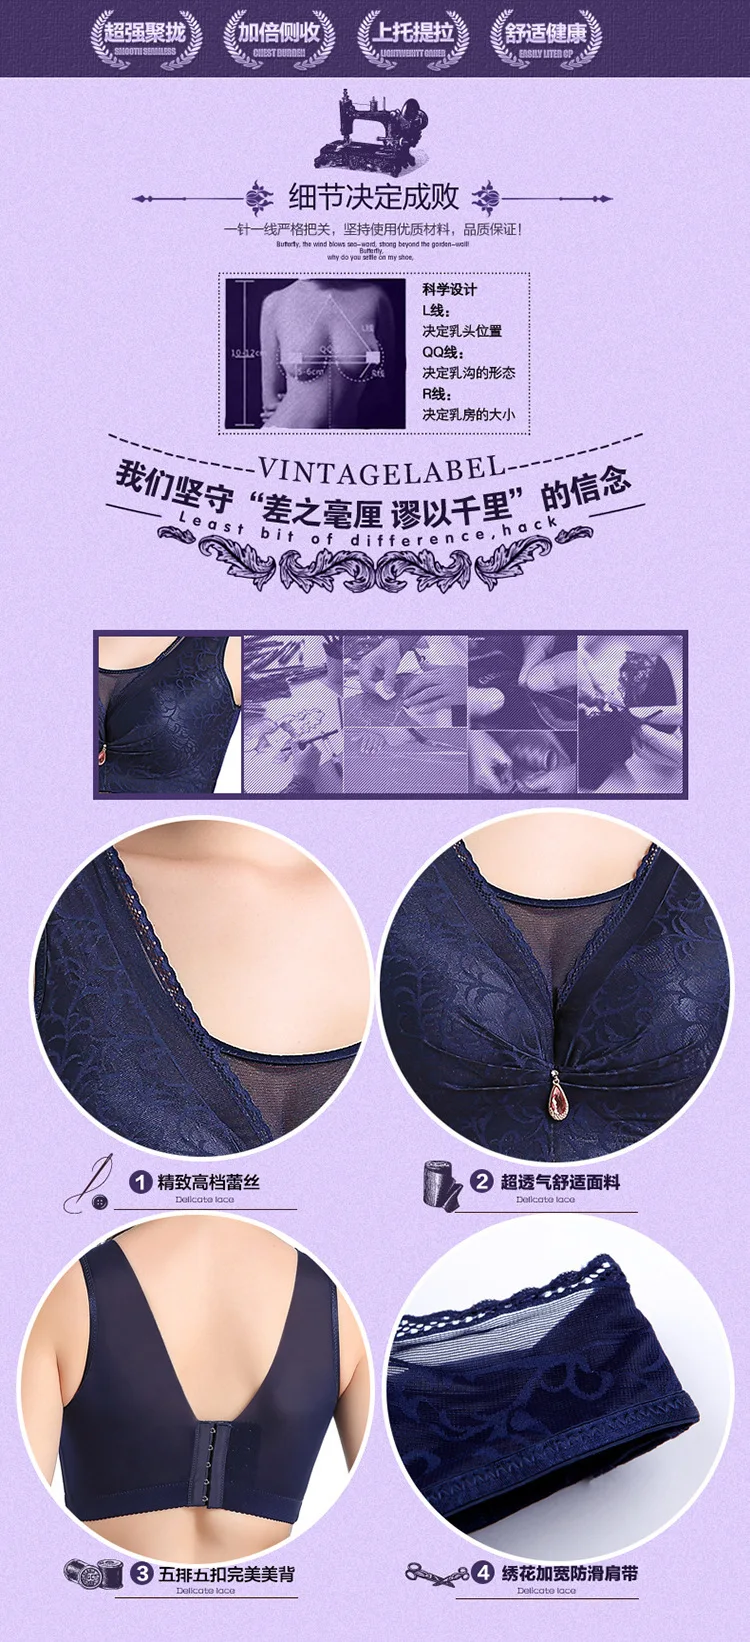 2018 Selling Hot Lace Bra Size Thin Cup Bra Fat Breasted Female Push Up Bra Bralette Encaje Sexy Bra 13